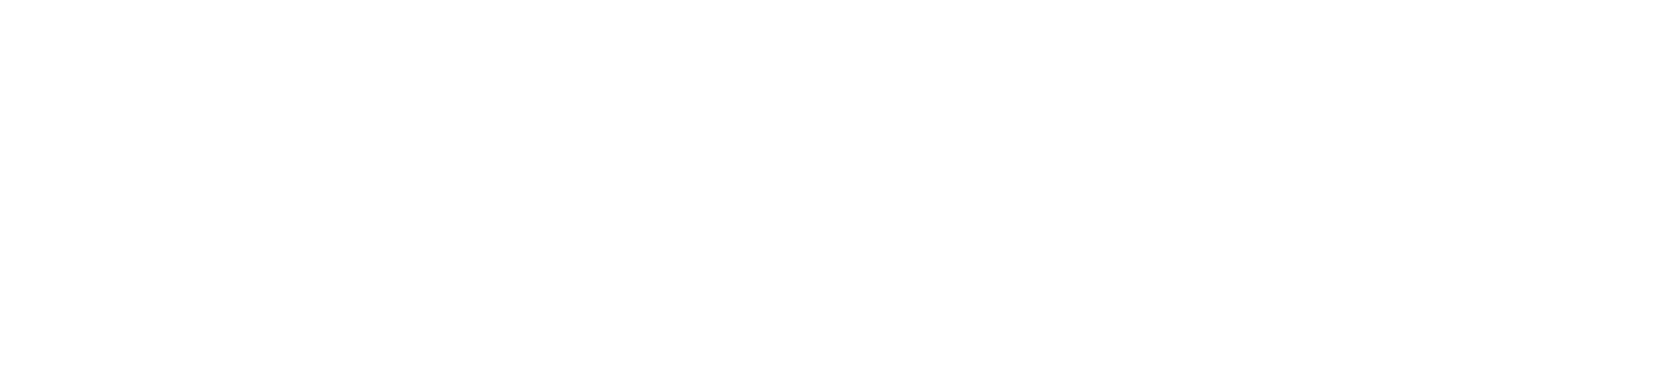 логотип компании Tmall